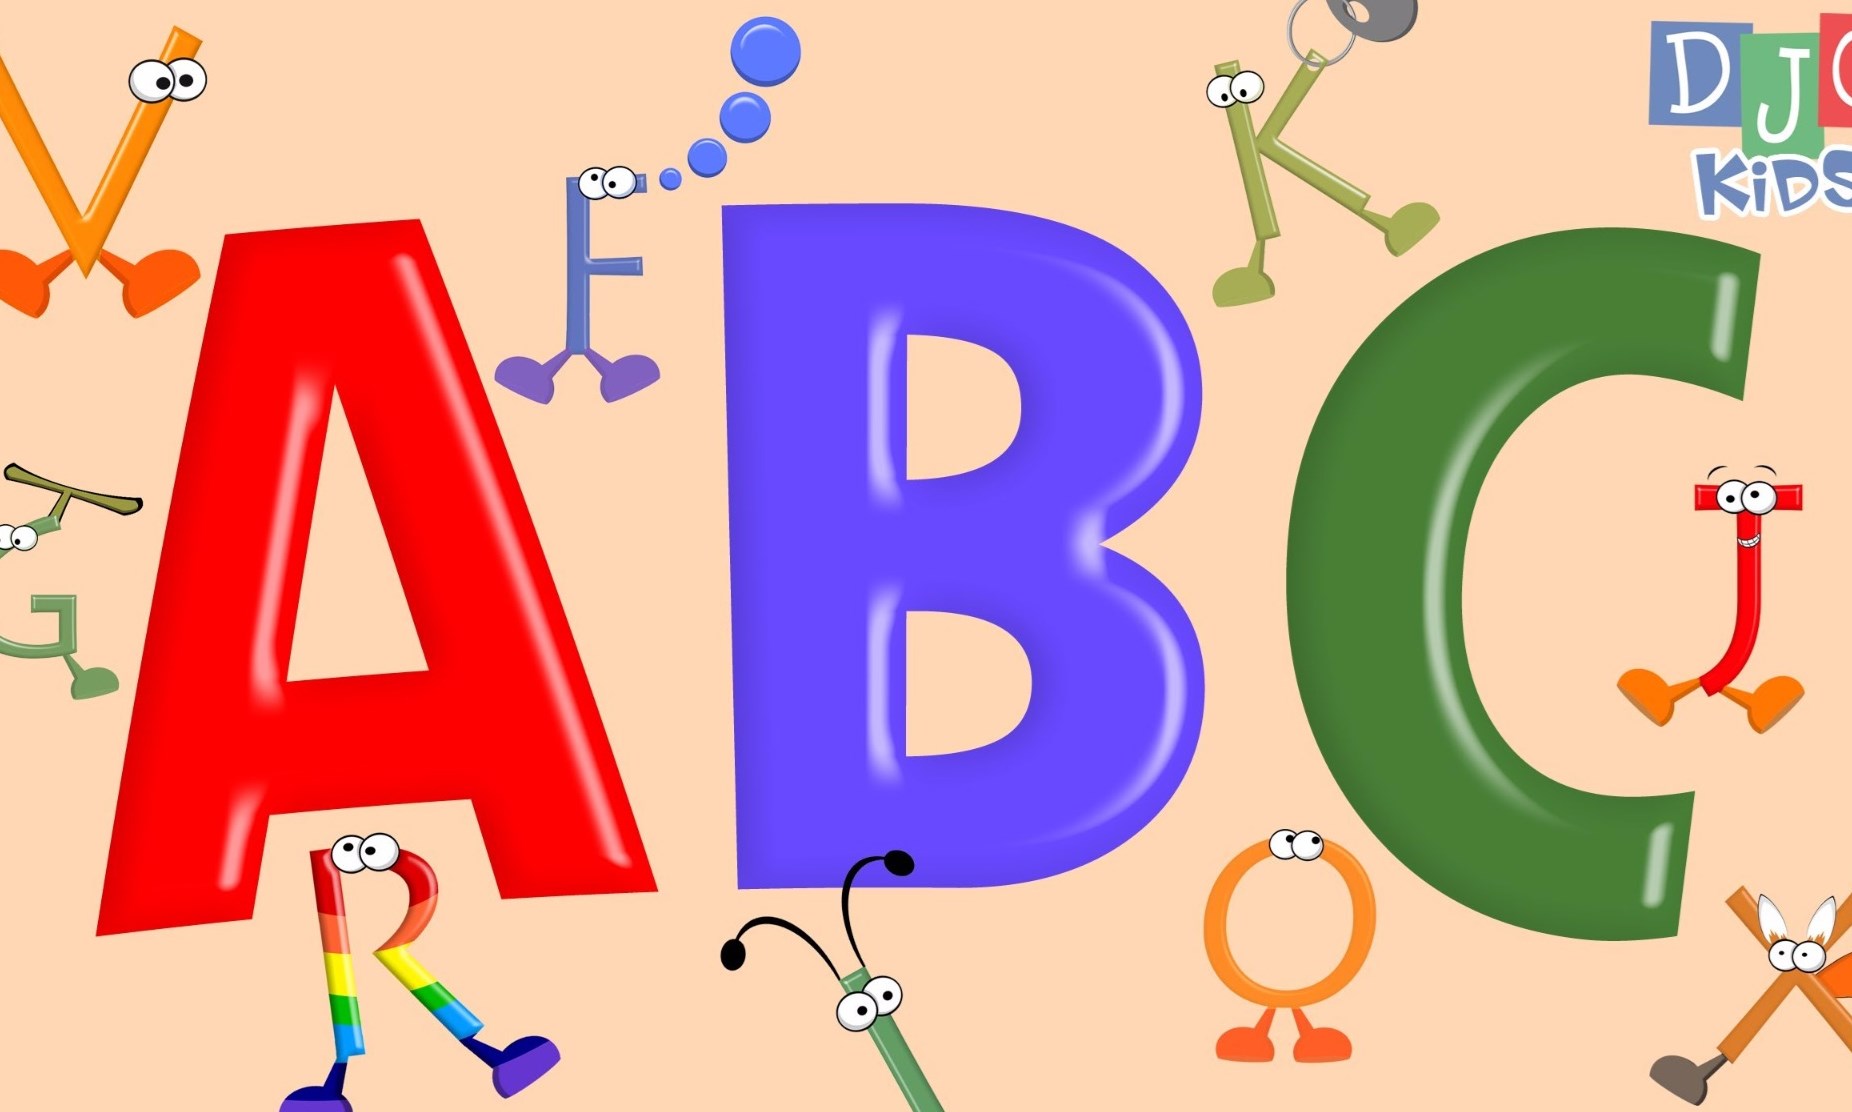 Fun with the Alphabet!